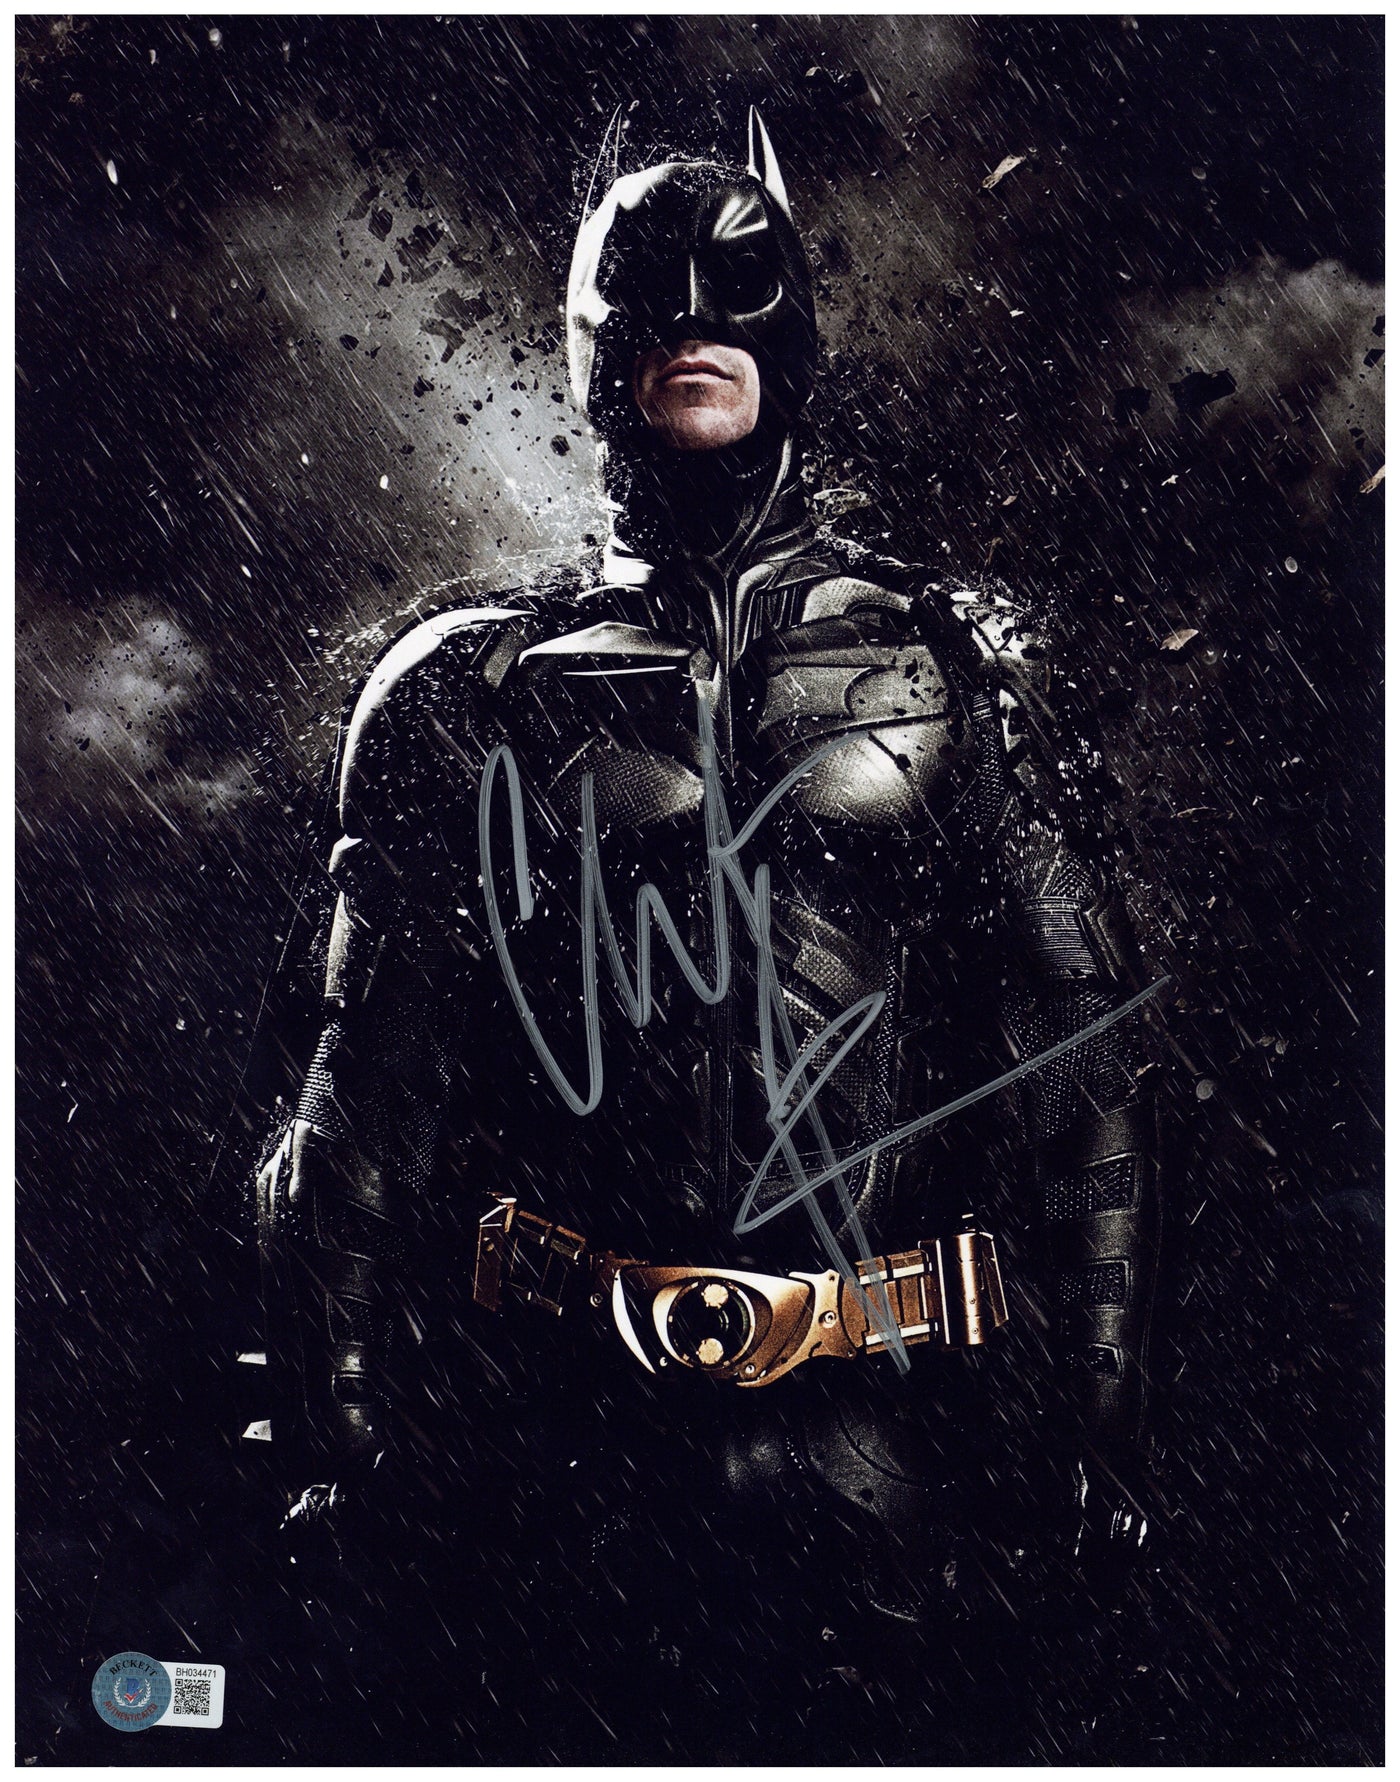 Christian Bale Signed Autograph 11x14 Photo The Dark Knight Batman BAS 3